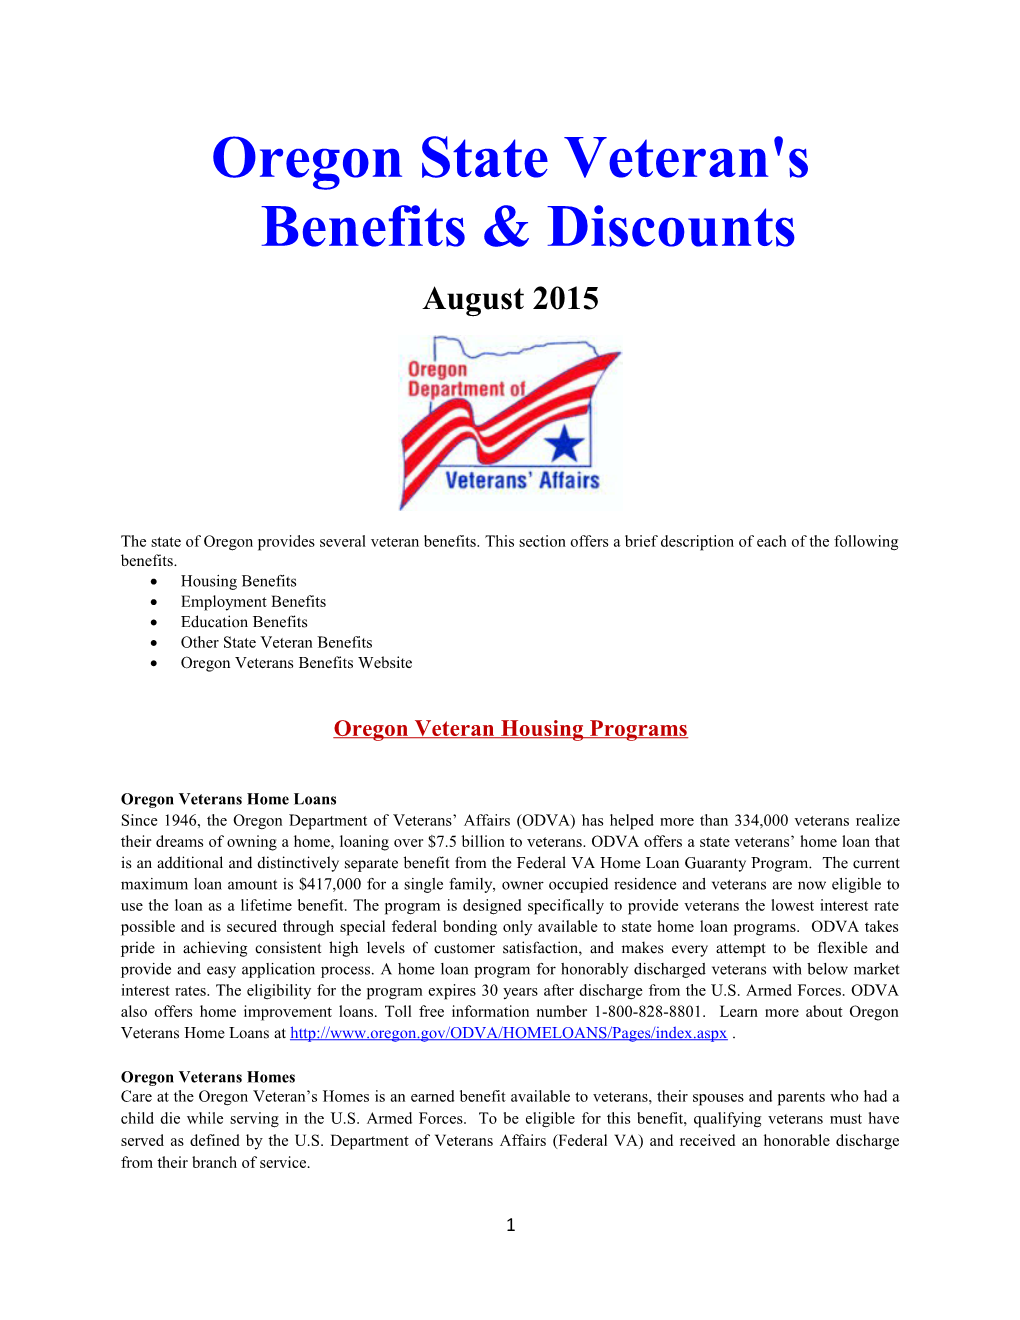 Oregon State Veteran's Benefits & Discounts